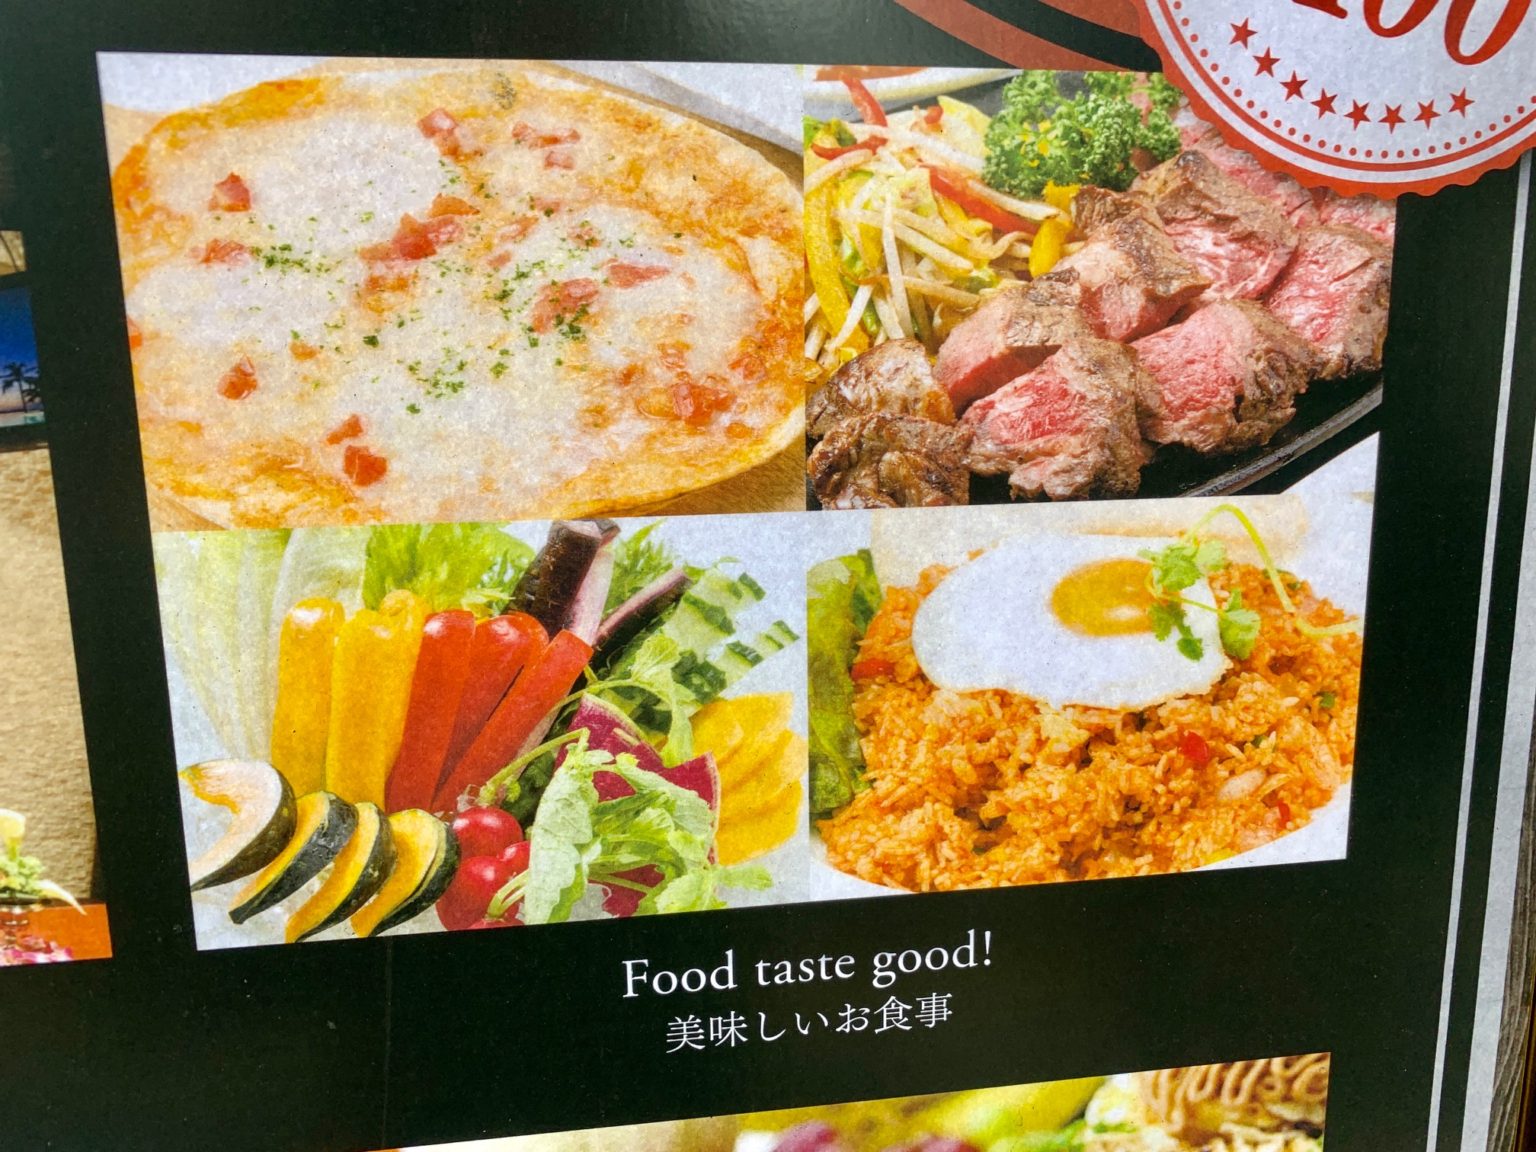 Food taste so good - Japanese restaurant sign